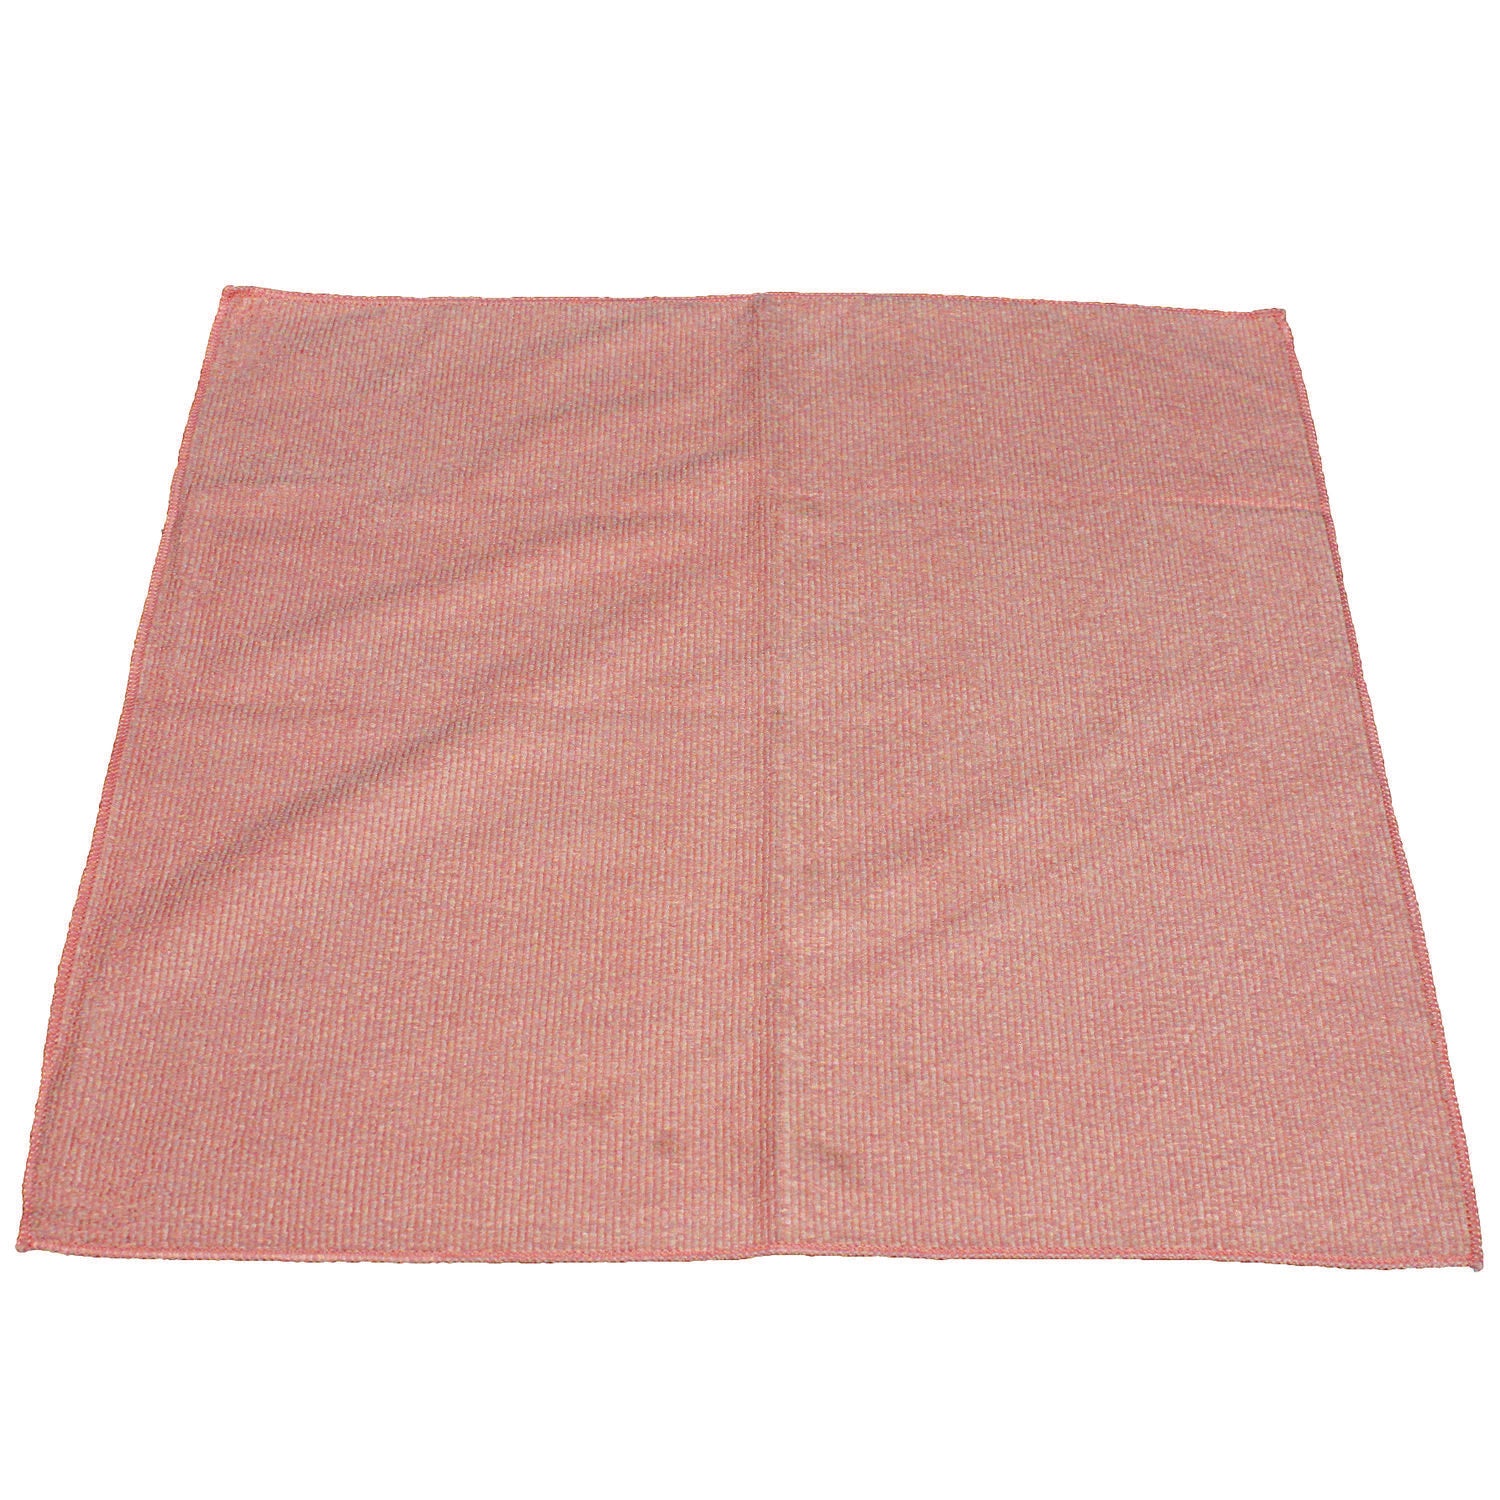 premium-weight-microfiber-dry-cloths-16-x-16-pink-12-pack_implfk400 - 2